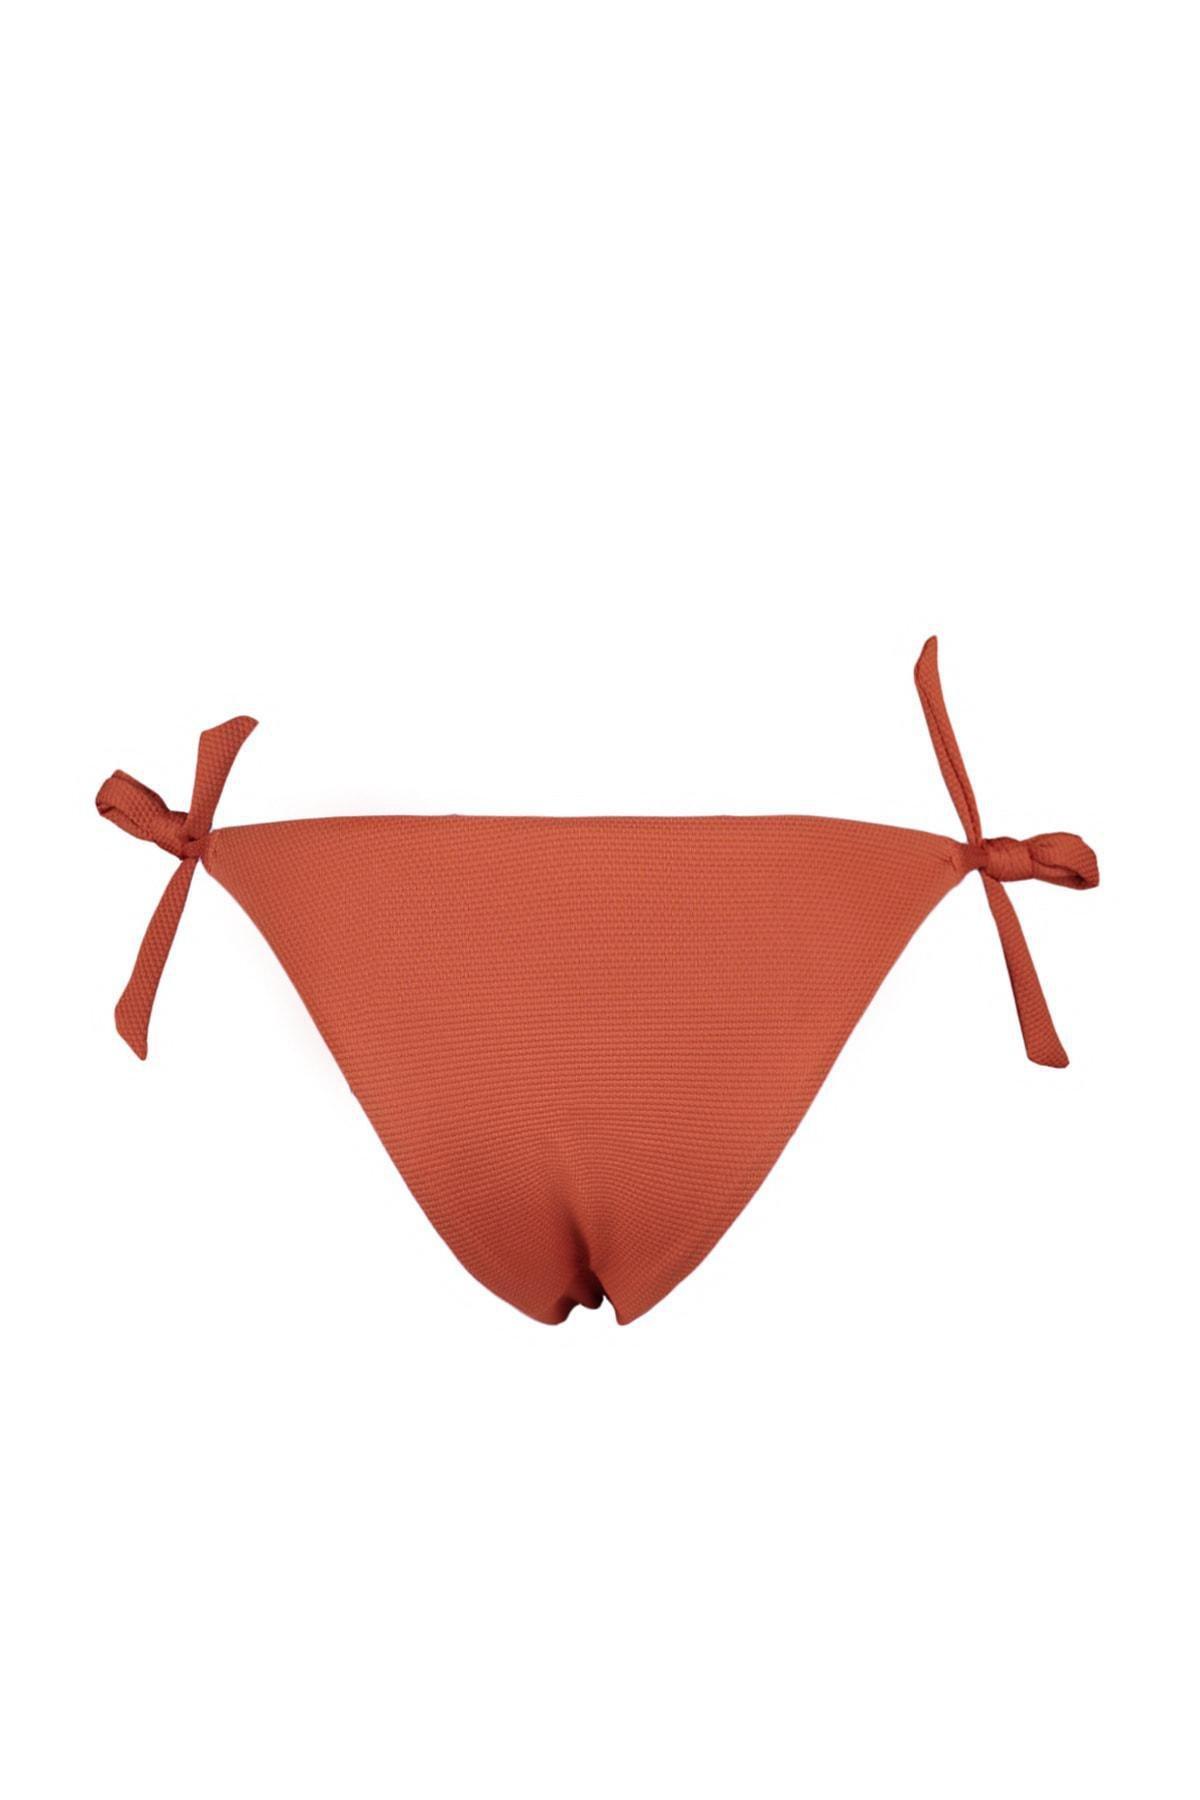 Trendyol - Orange Mid Waist Bikini Bottom